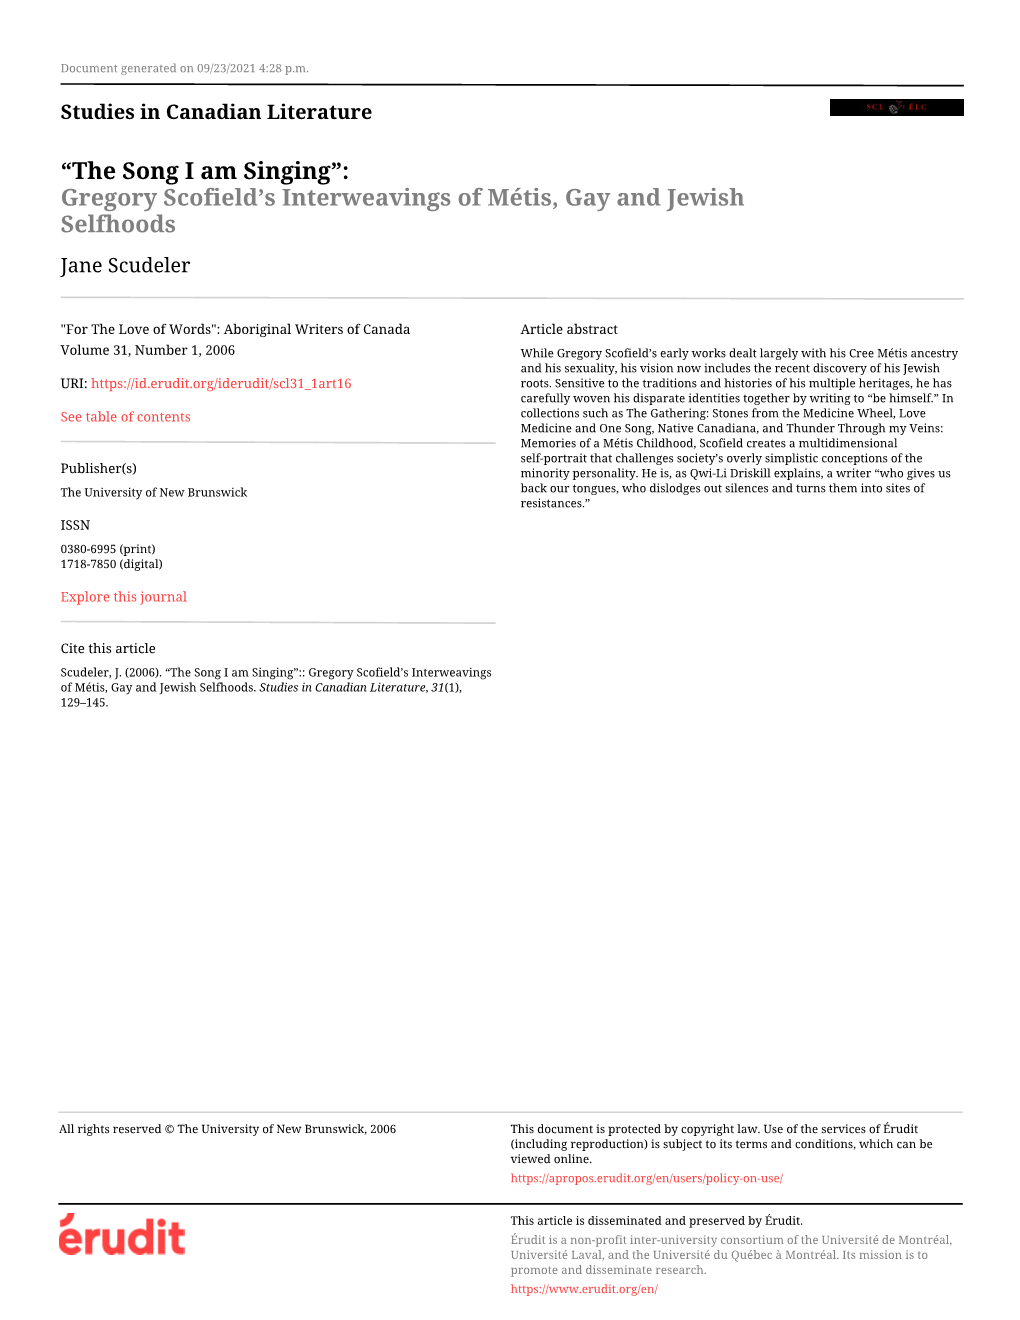 Gregory Scofield's Interweavings of Métis, Gay and Jewish